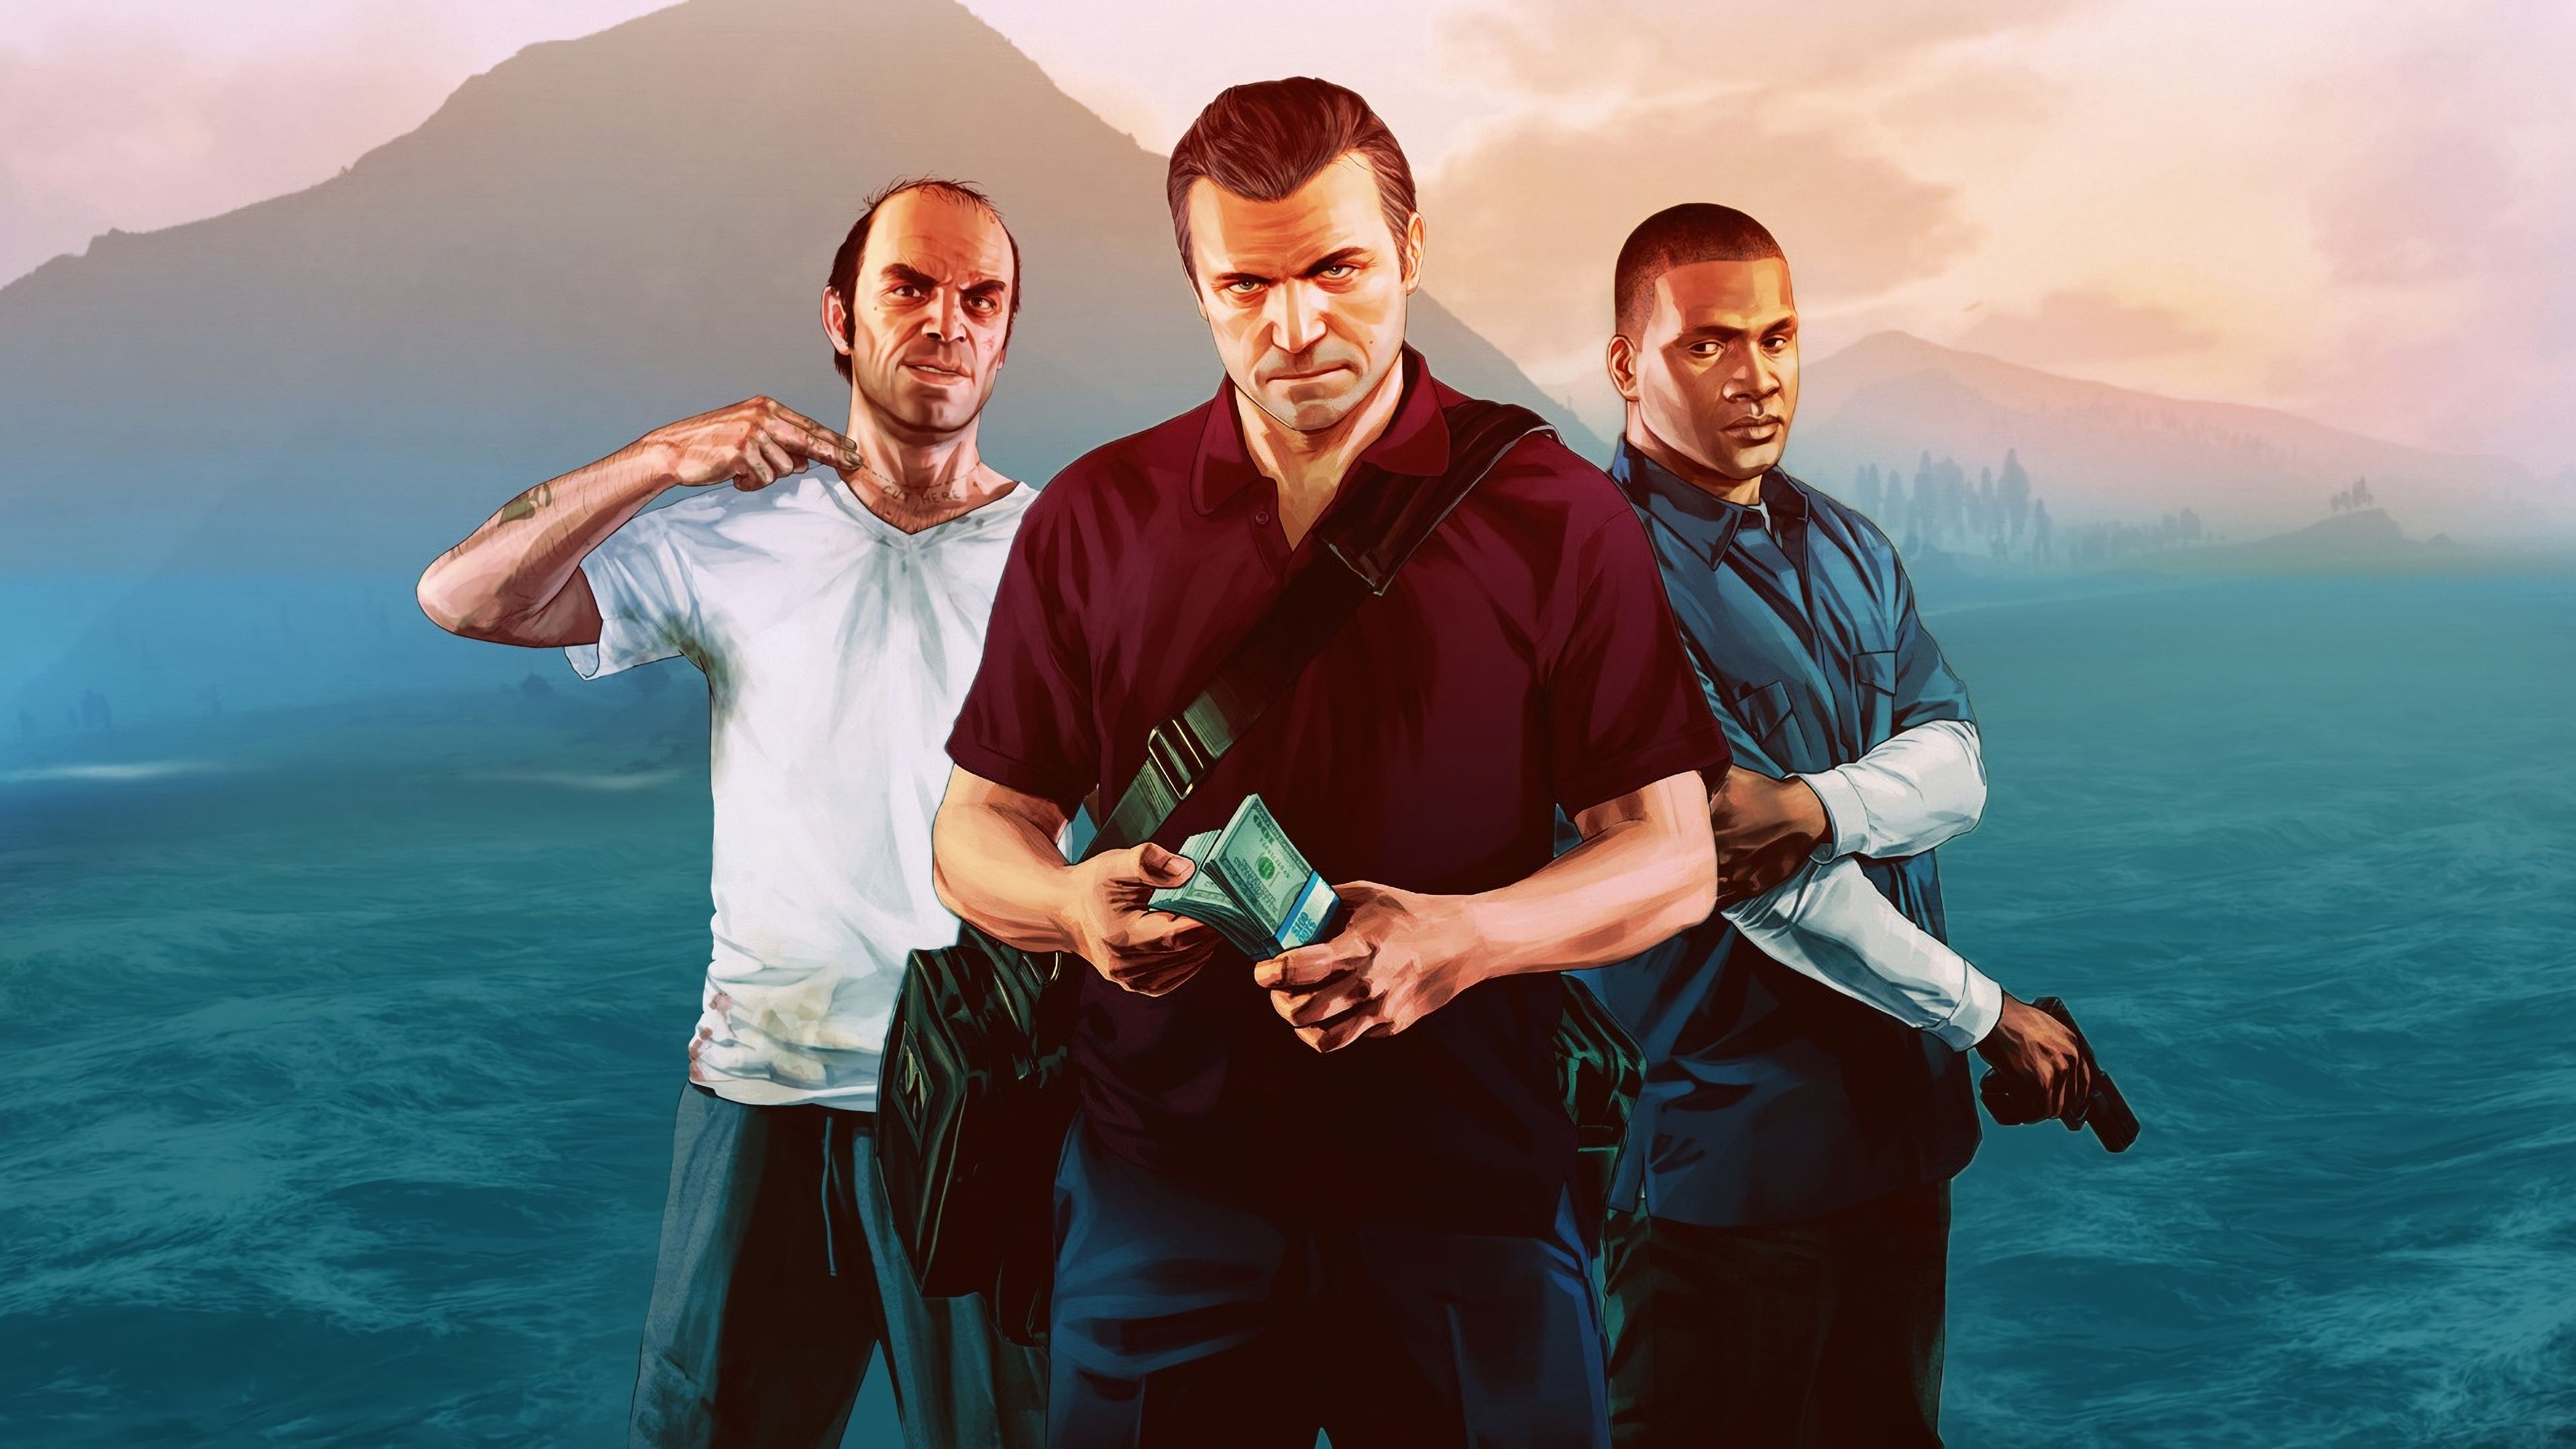 Trevor, Franklin and Michael in GTA Wallpaper, HD Games 4K